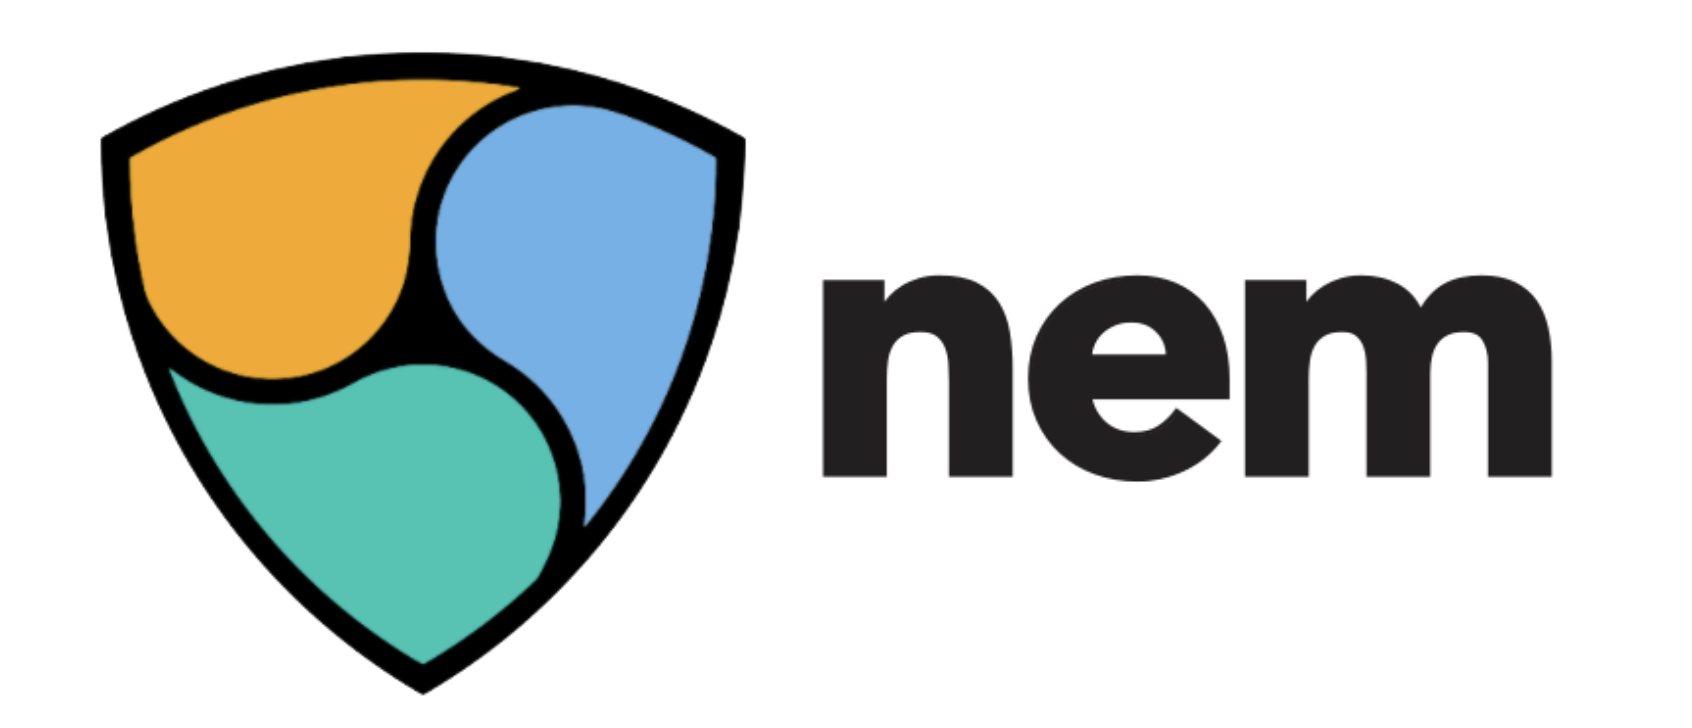 NEM（ネム）財団とは？活動内容や主要メンバー、コインチェック事件の対応について